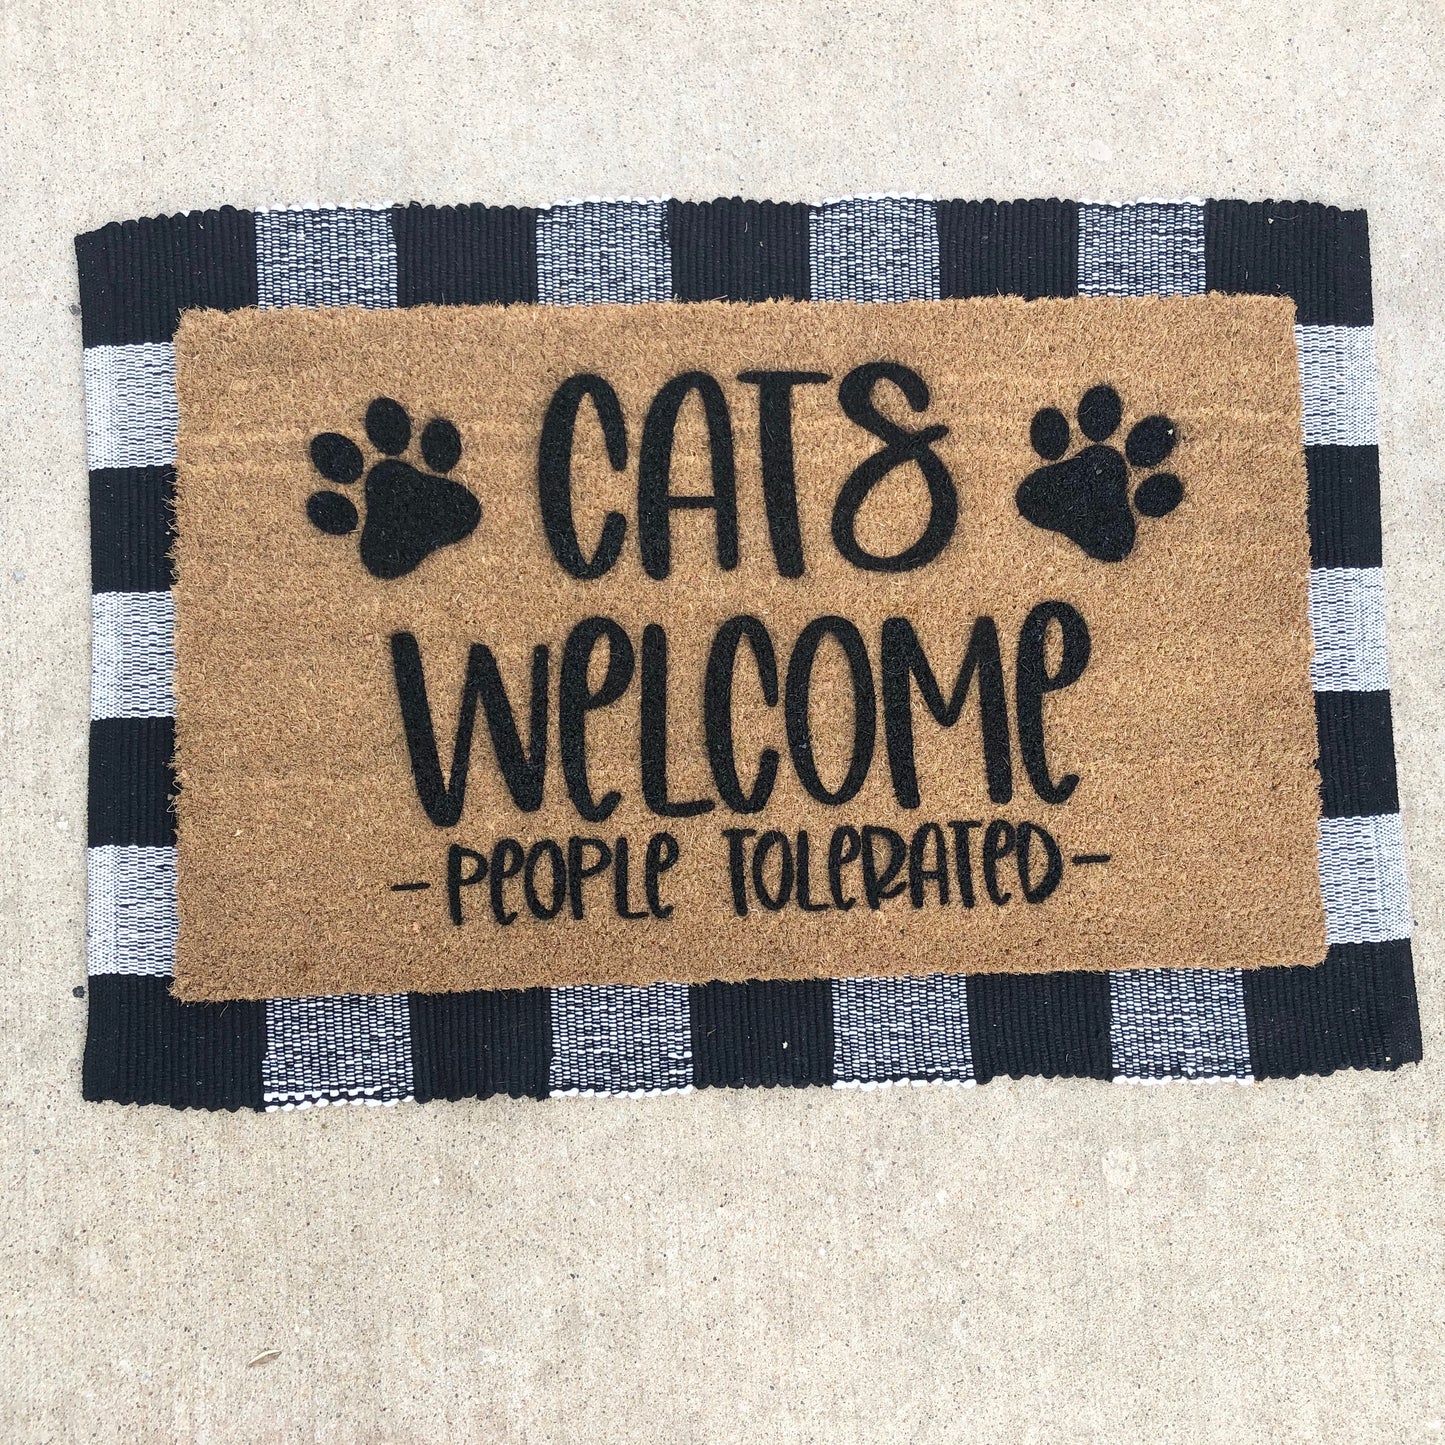 Cats Welcome People Tolerated Doormat